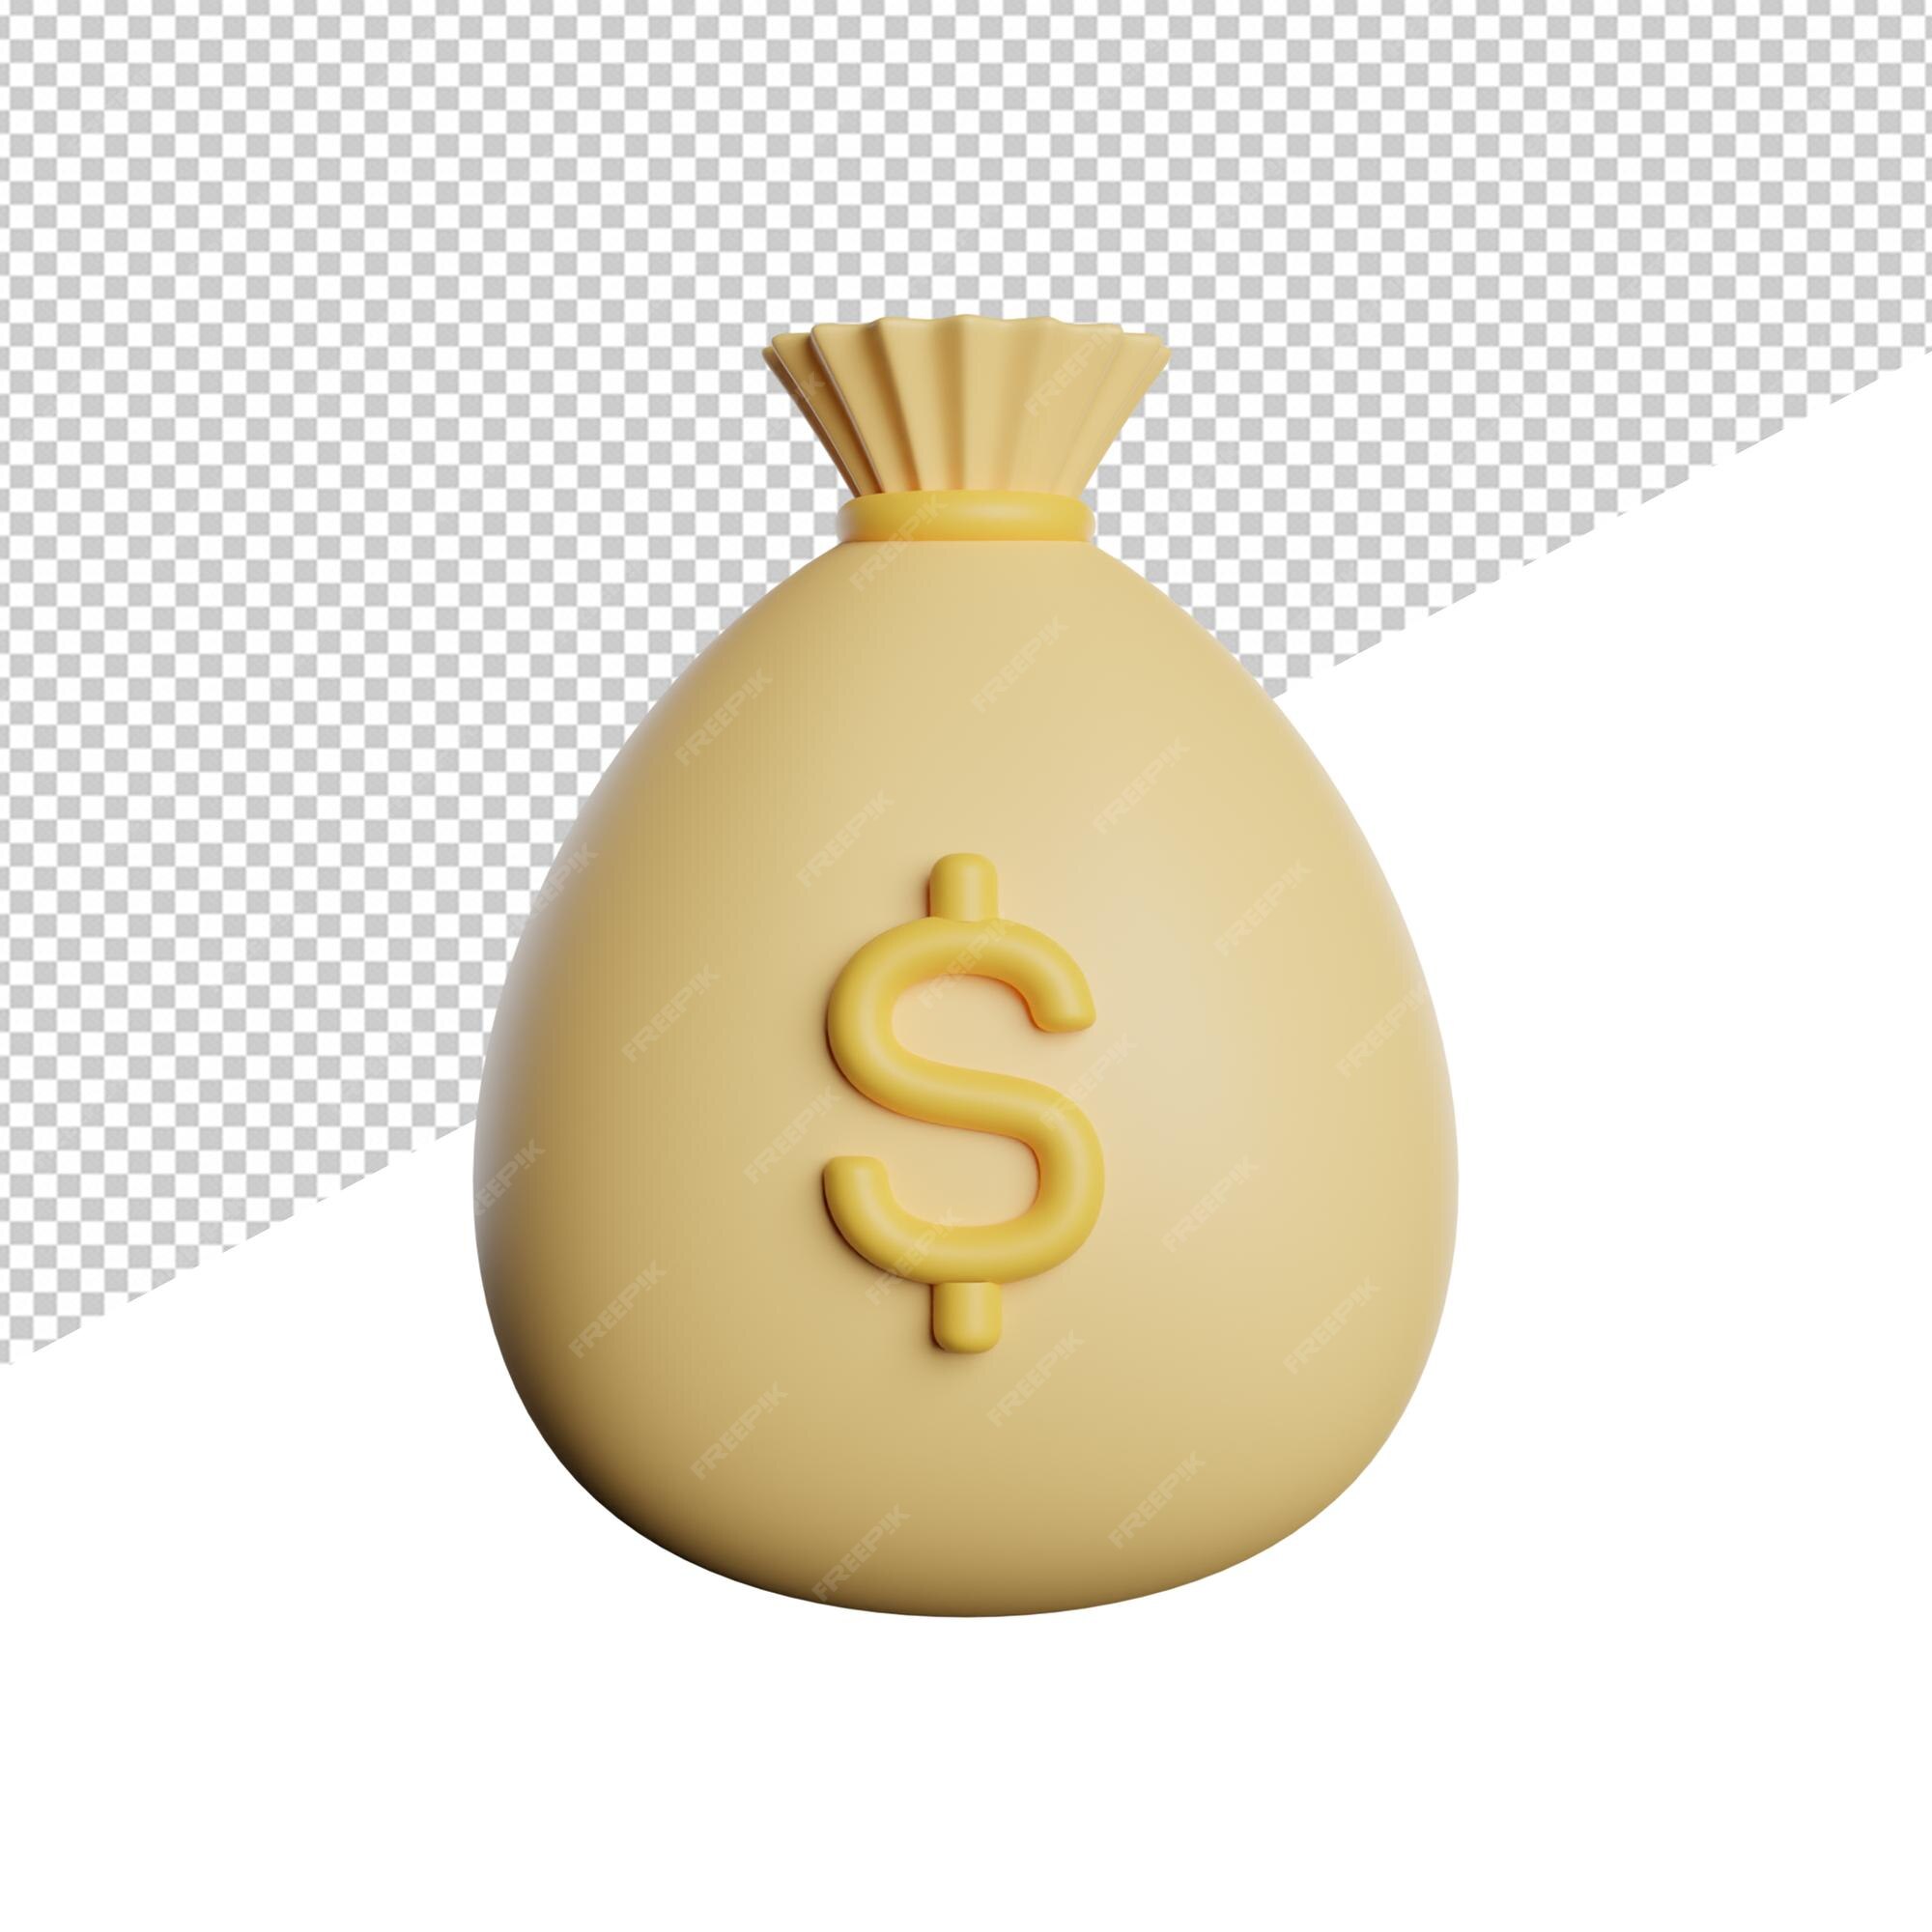 Premium PSD  Money bag rewards front view 3d rendering icon illustration  on transparent background